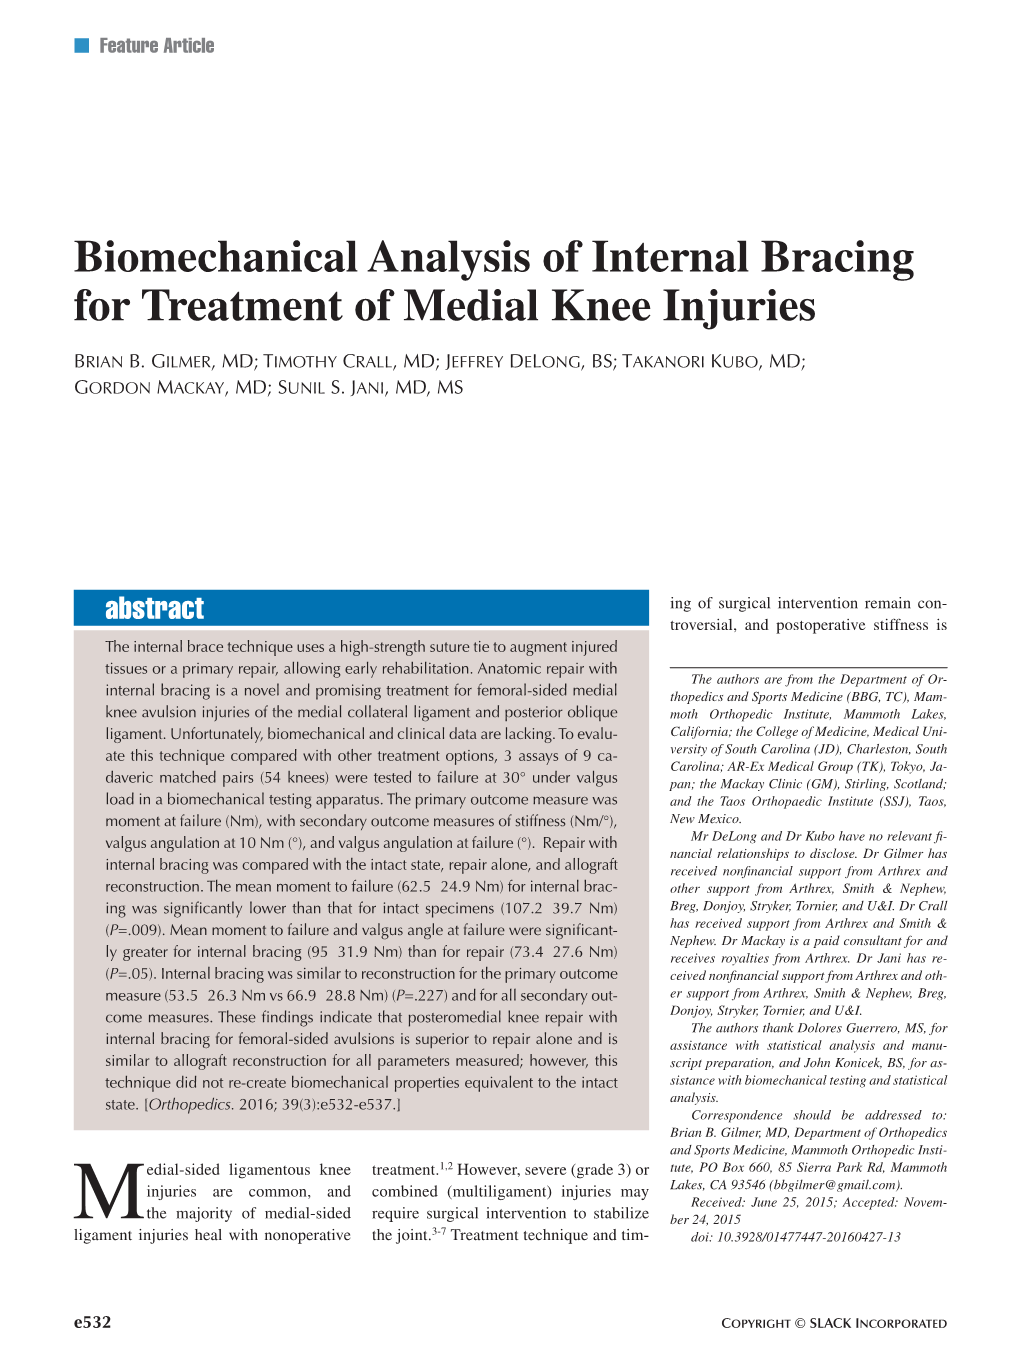 Biomechanical Analysis of Internal Bracing for Treatment of Medial Knee Injuries